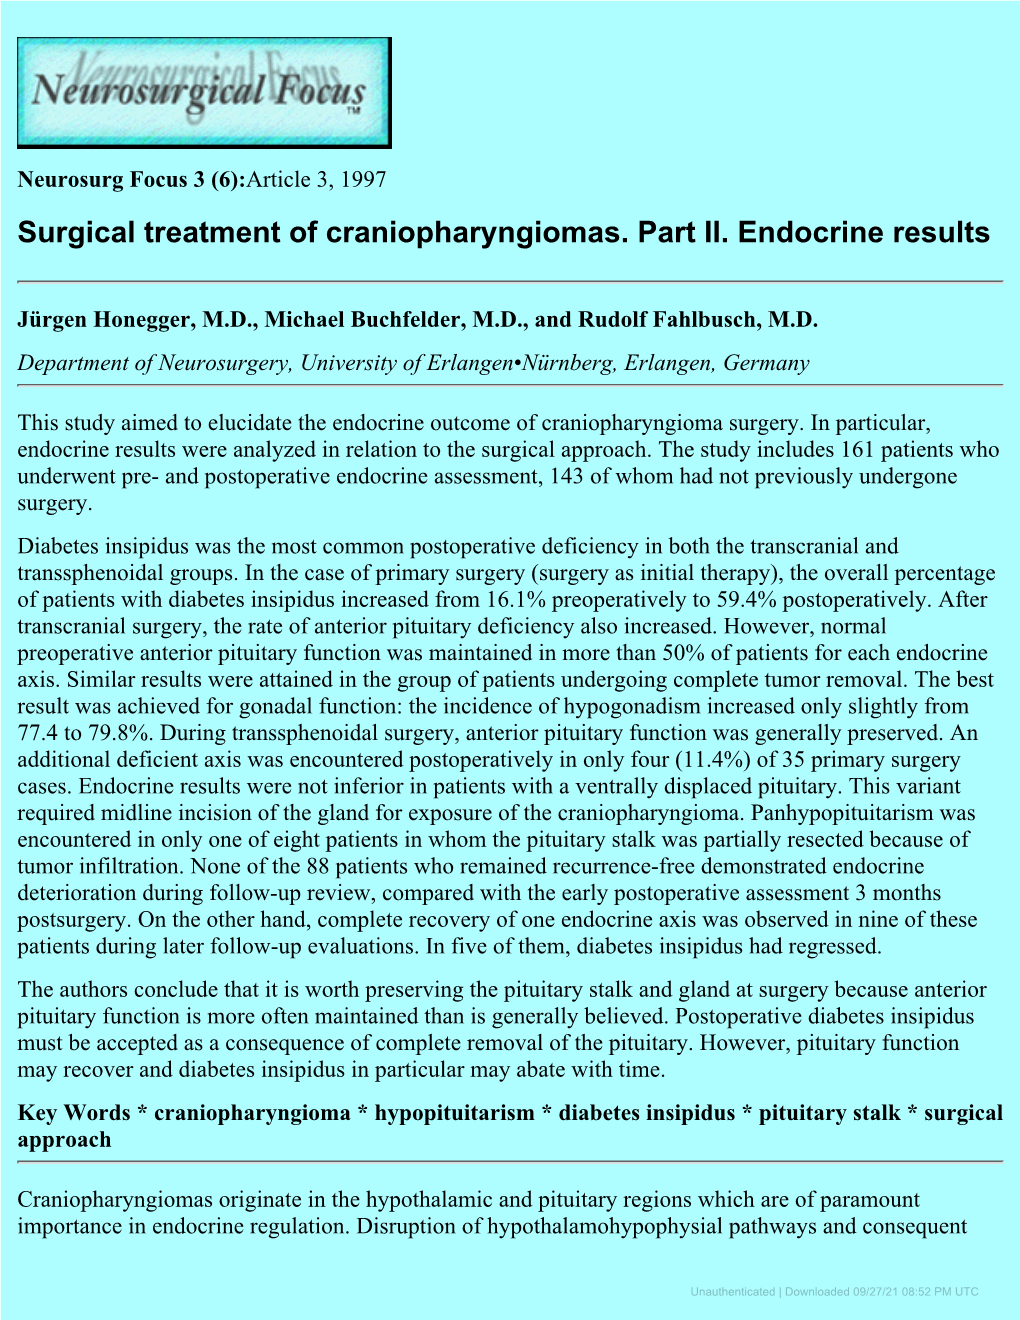 Surgical Treatment of Craniopharyngiomas. Part II